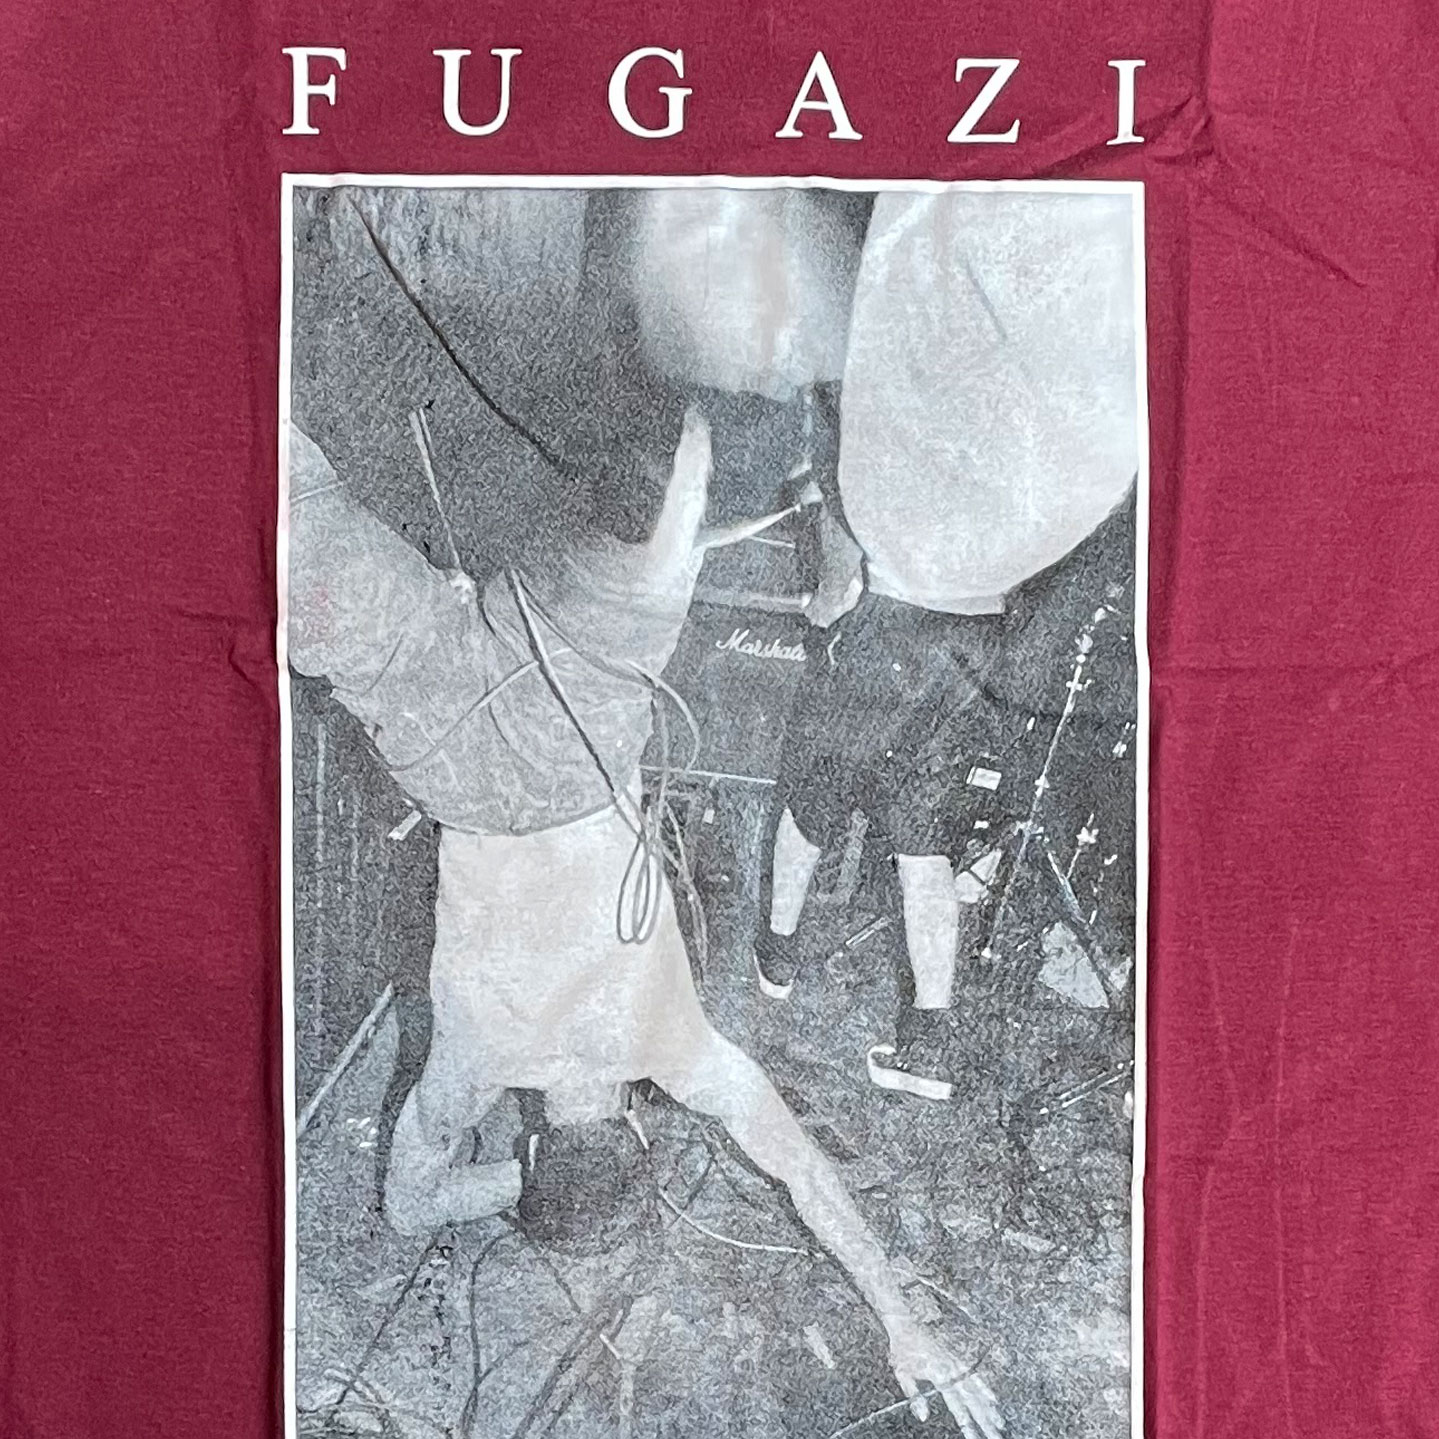 FUGAZI Tシャツ waiting room